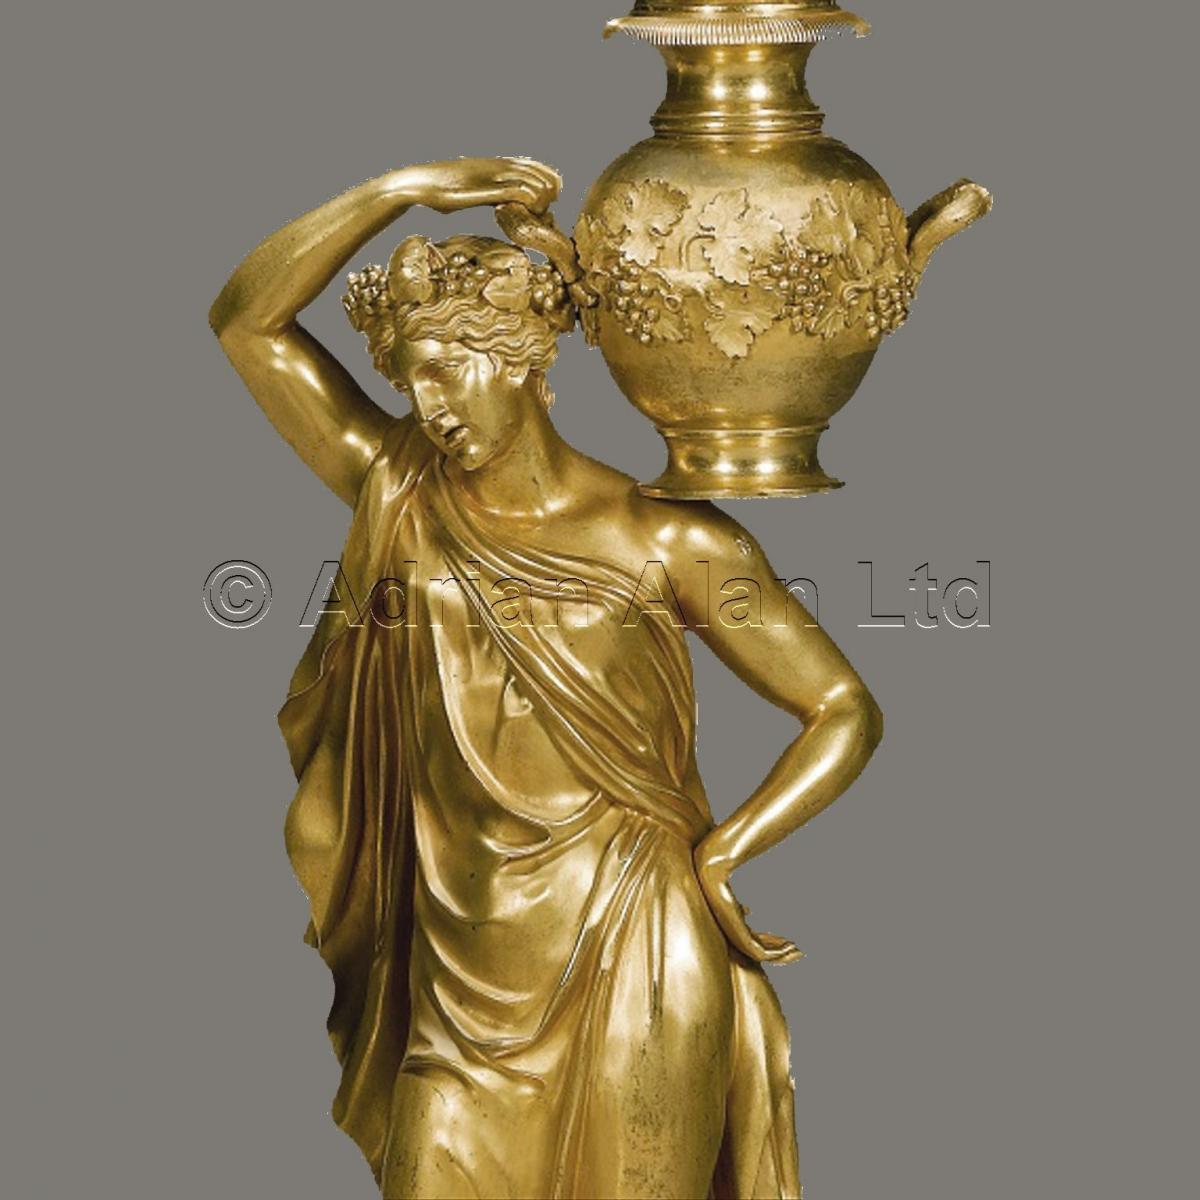 Pair of Gilt-Bronze Figural Empire Period Candelabra